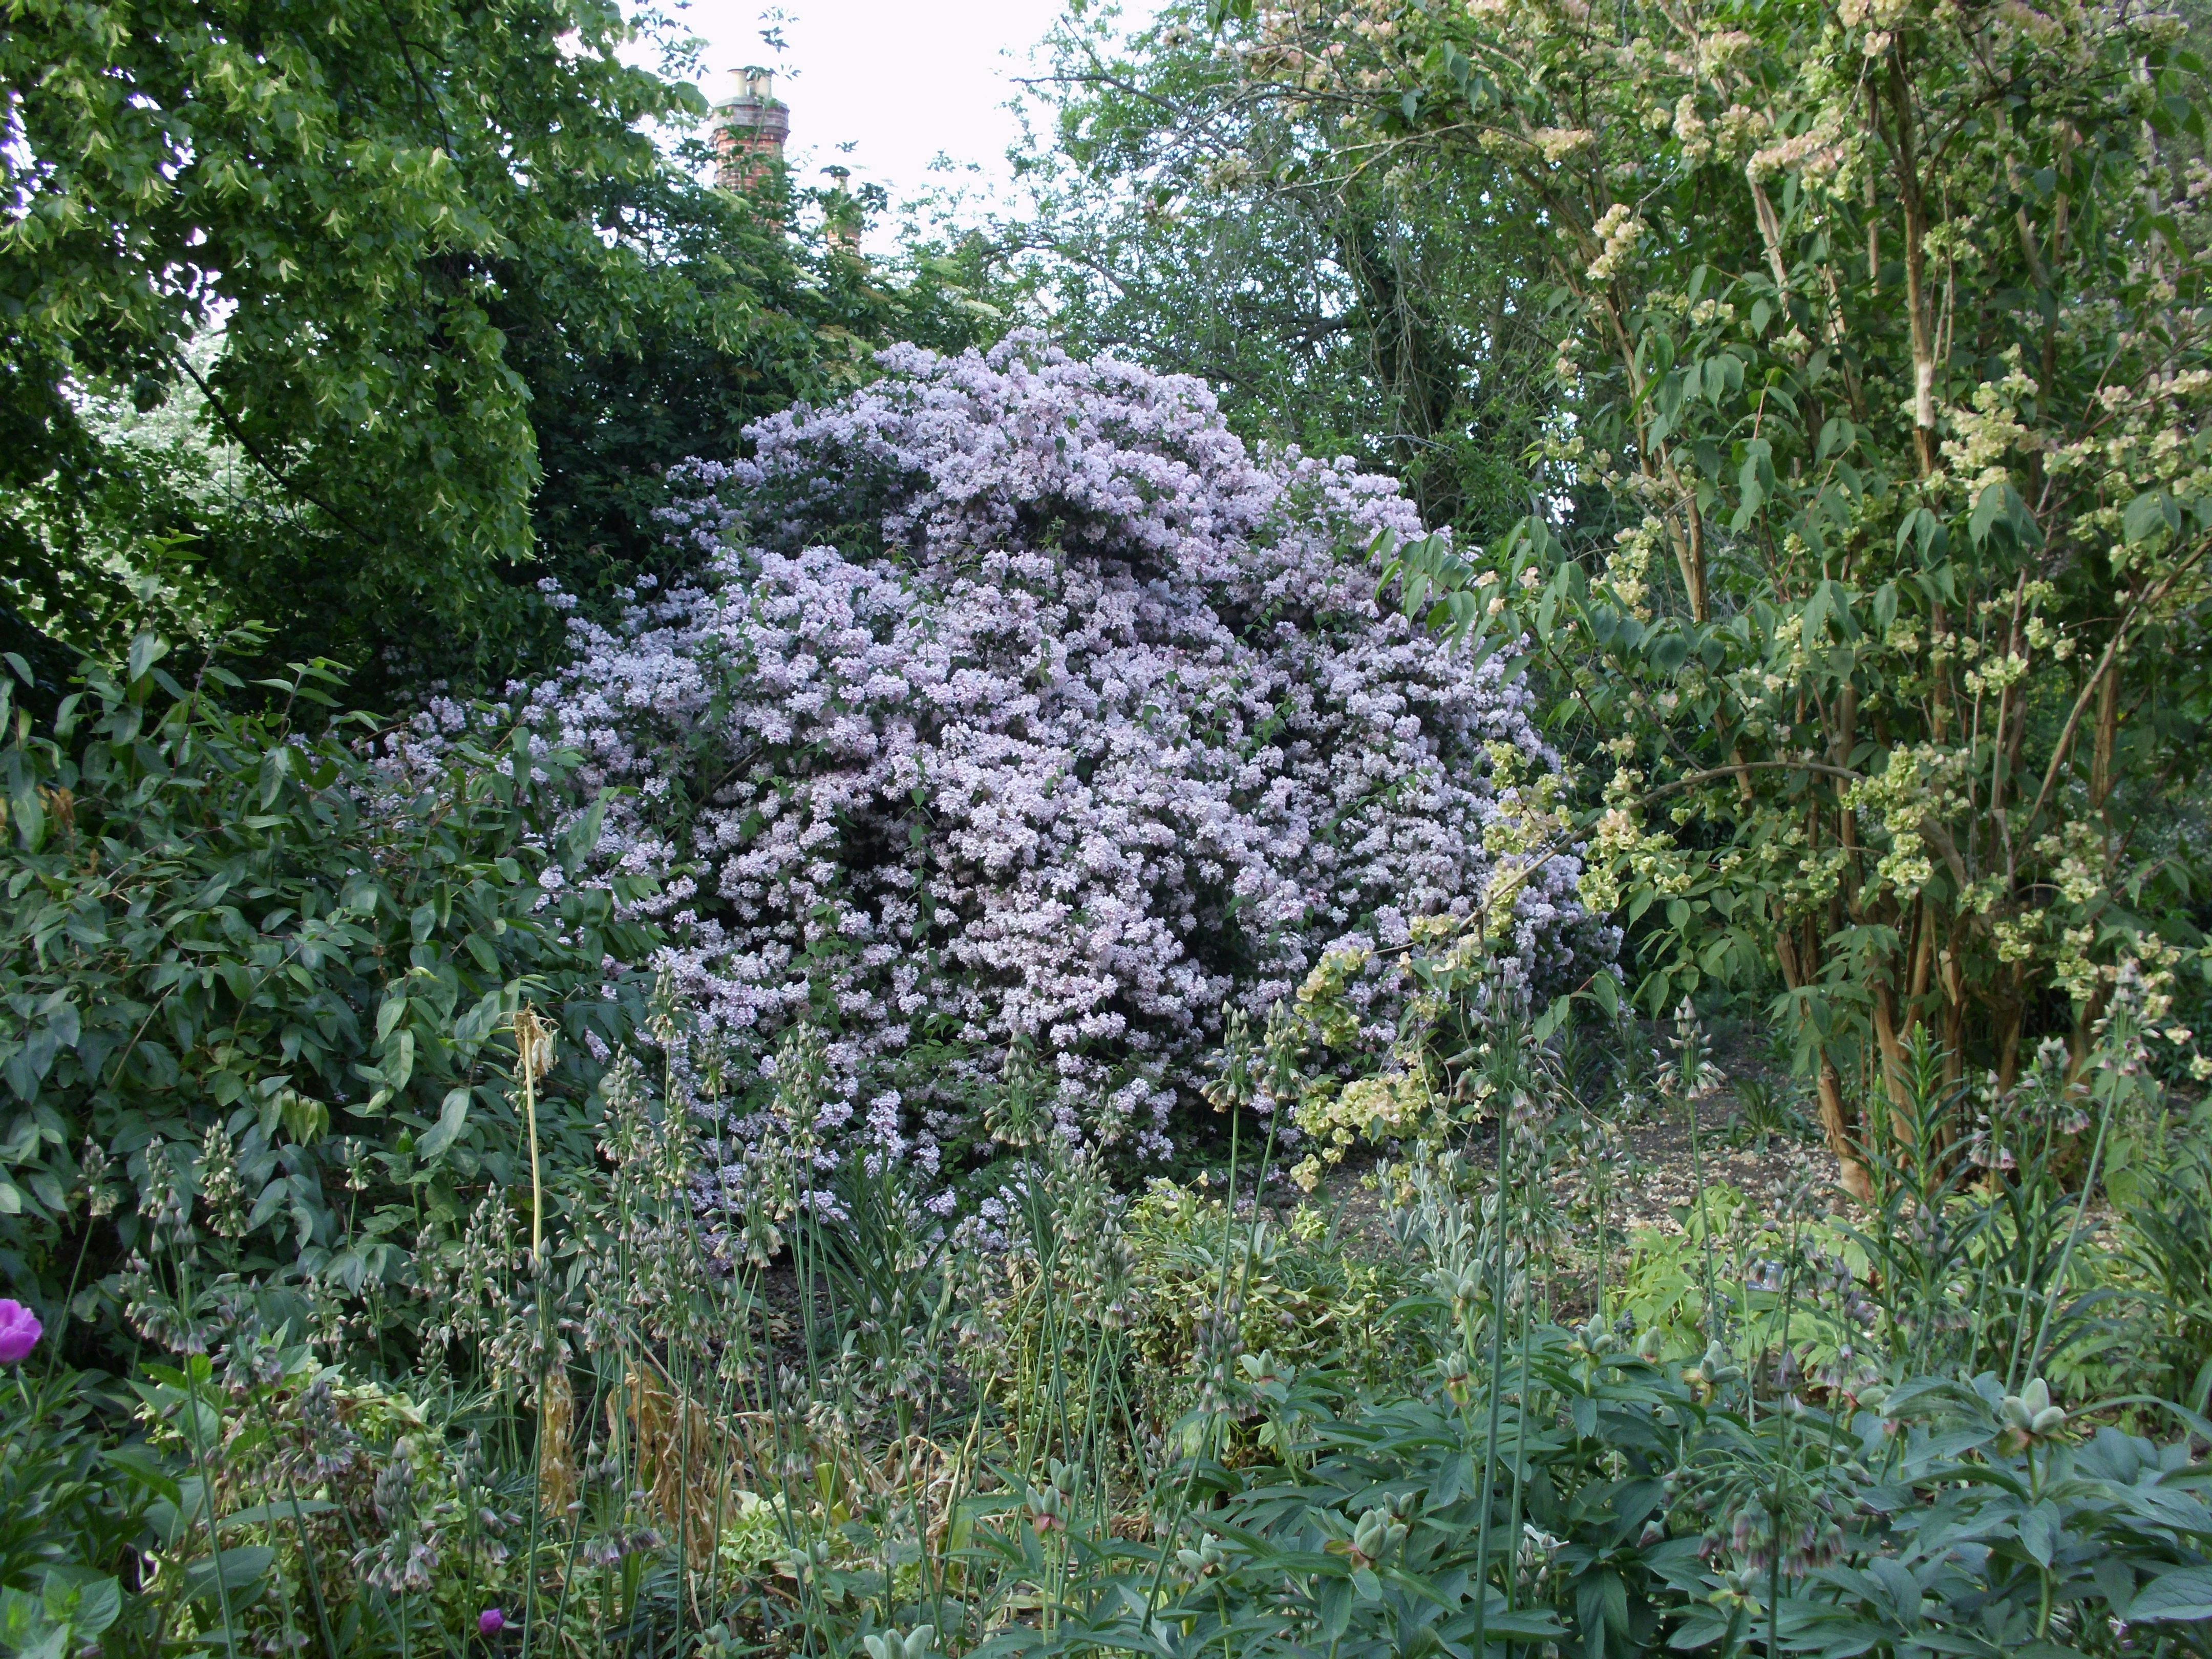 Free stock photo of Cambridge University Botanic Garden, Small tree with white flowers